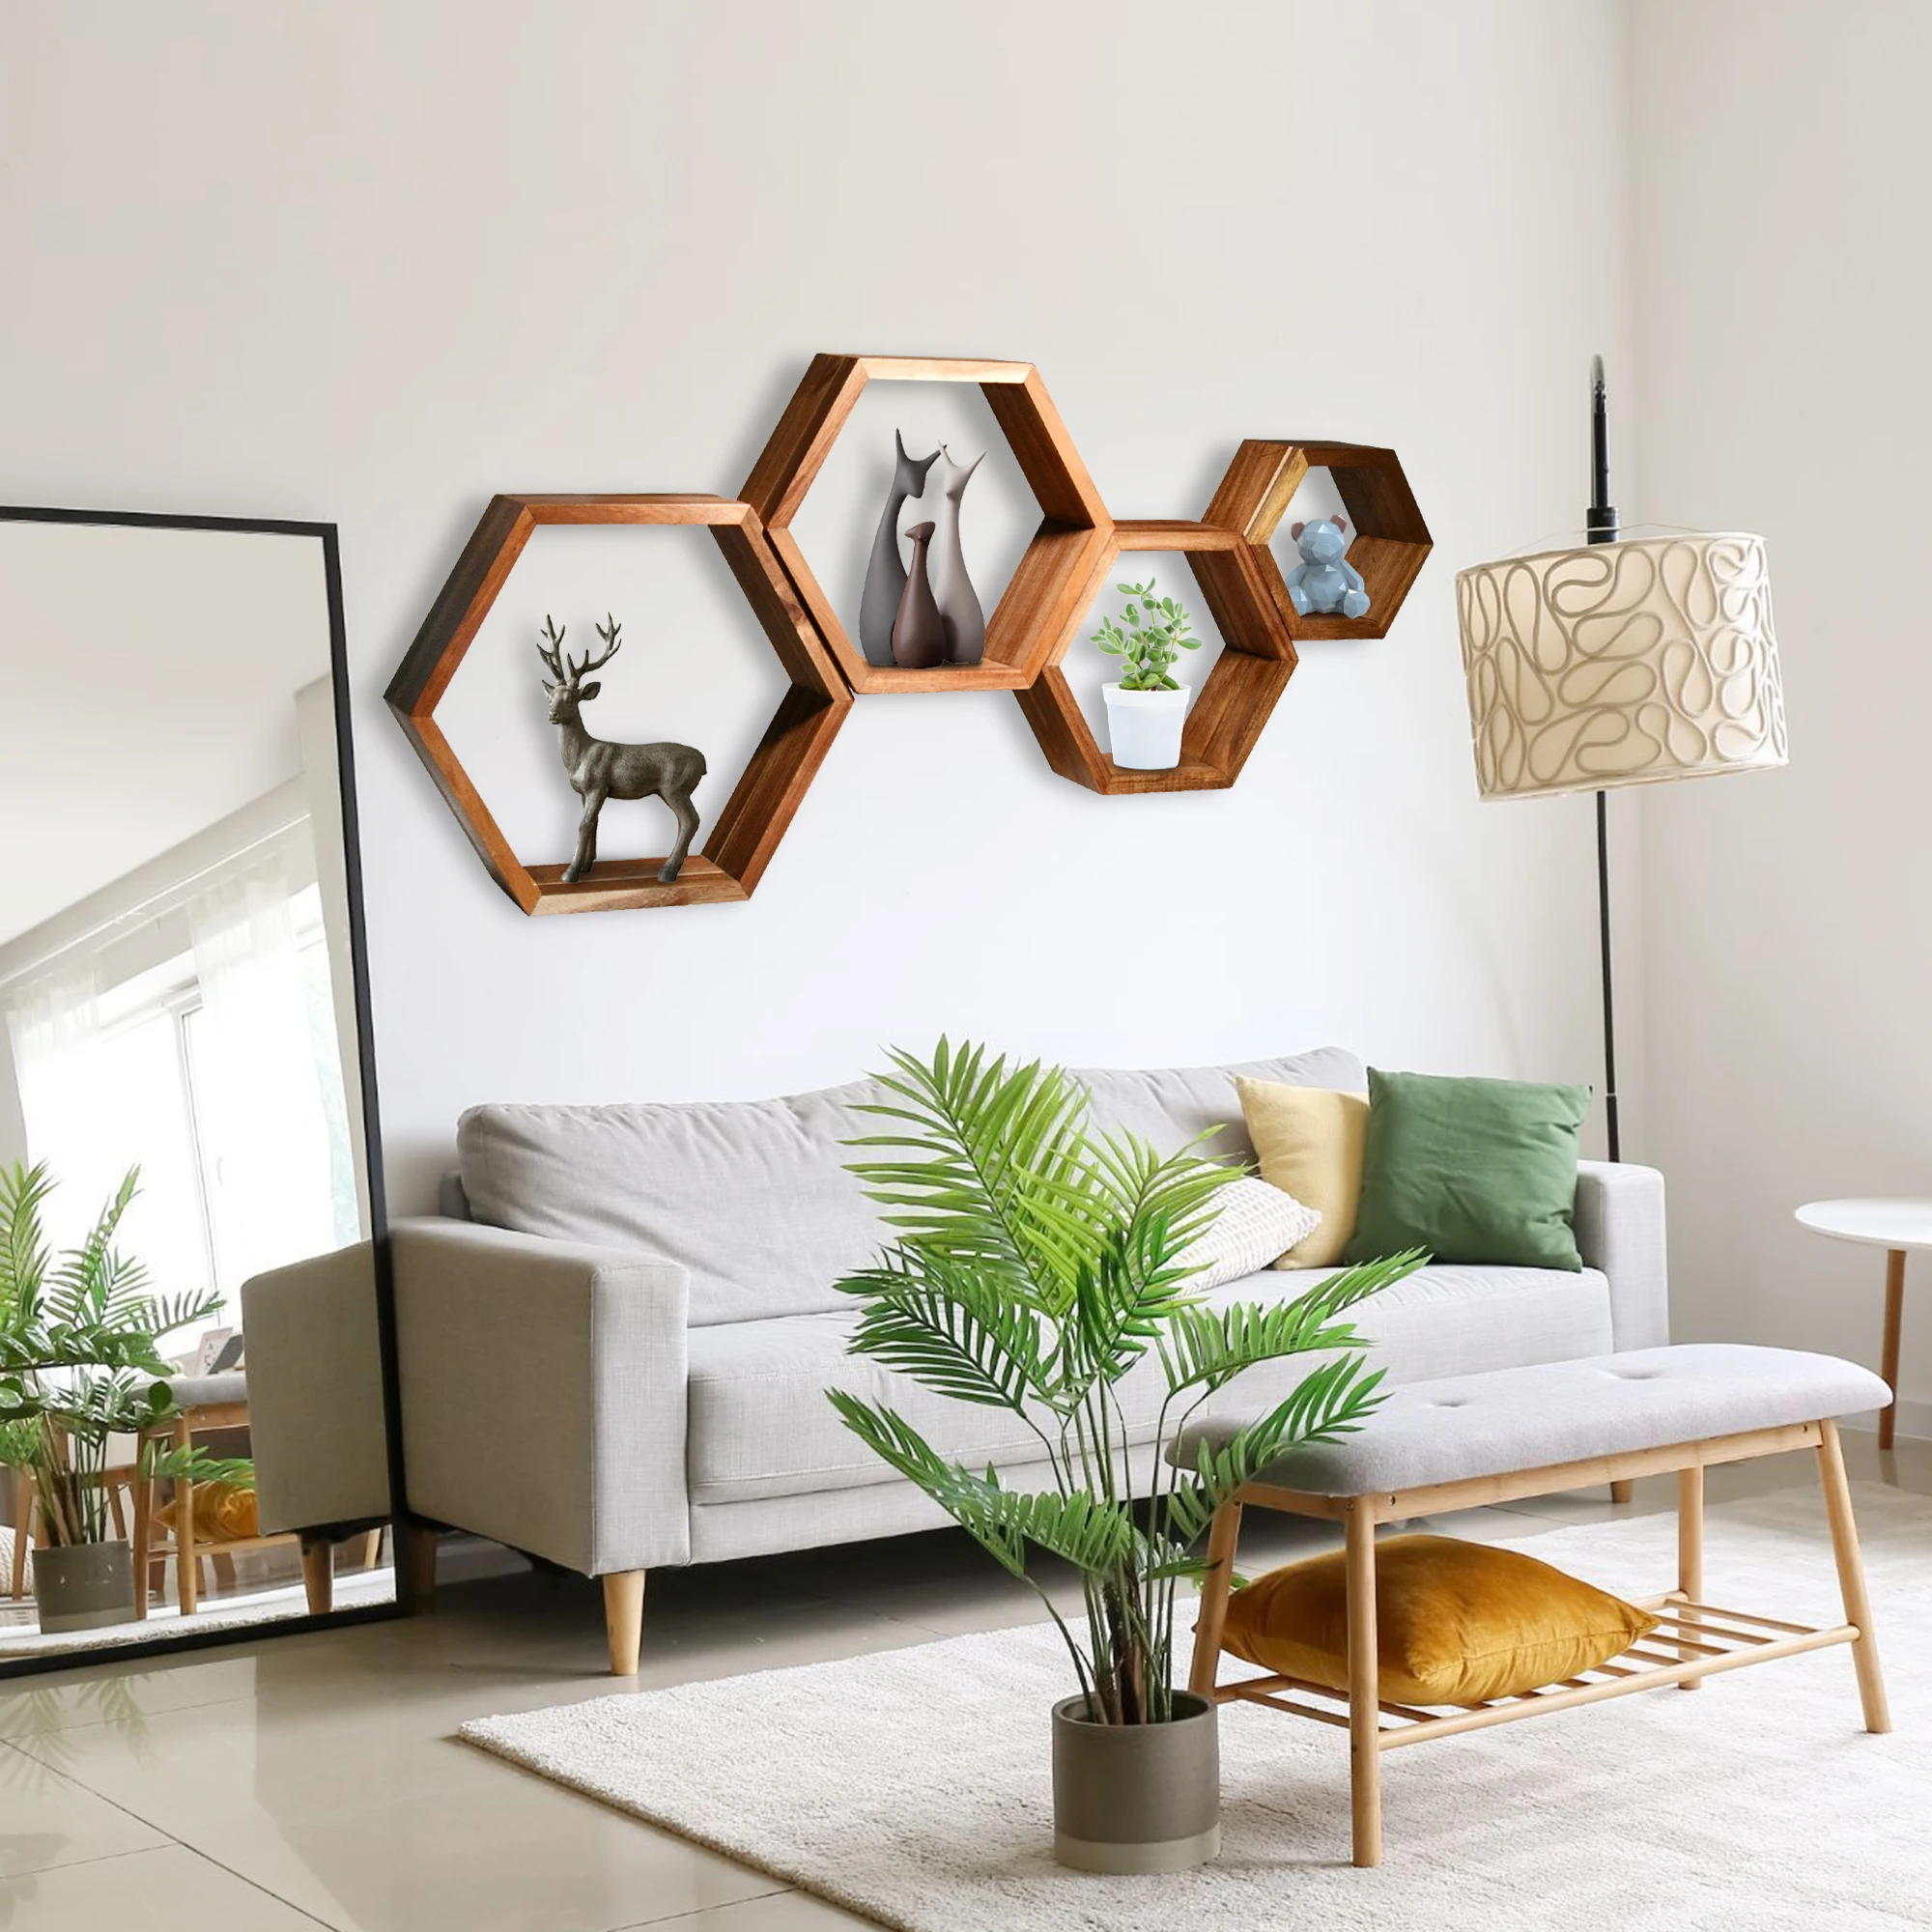 Wall Mounted Set of 4 Hexagonal Floating Shelves Frame;Decoration Wood Hexagon Shelf Floating Shelves